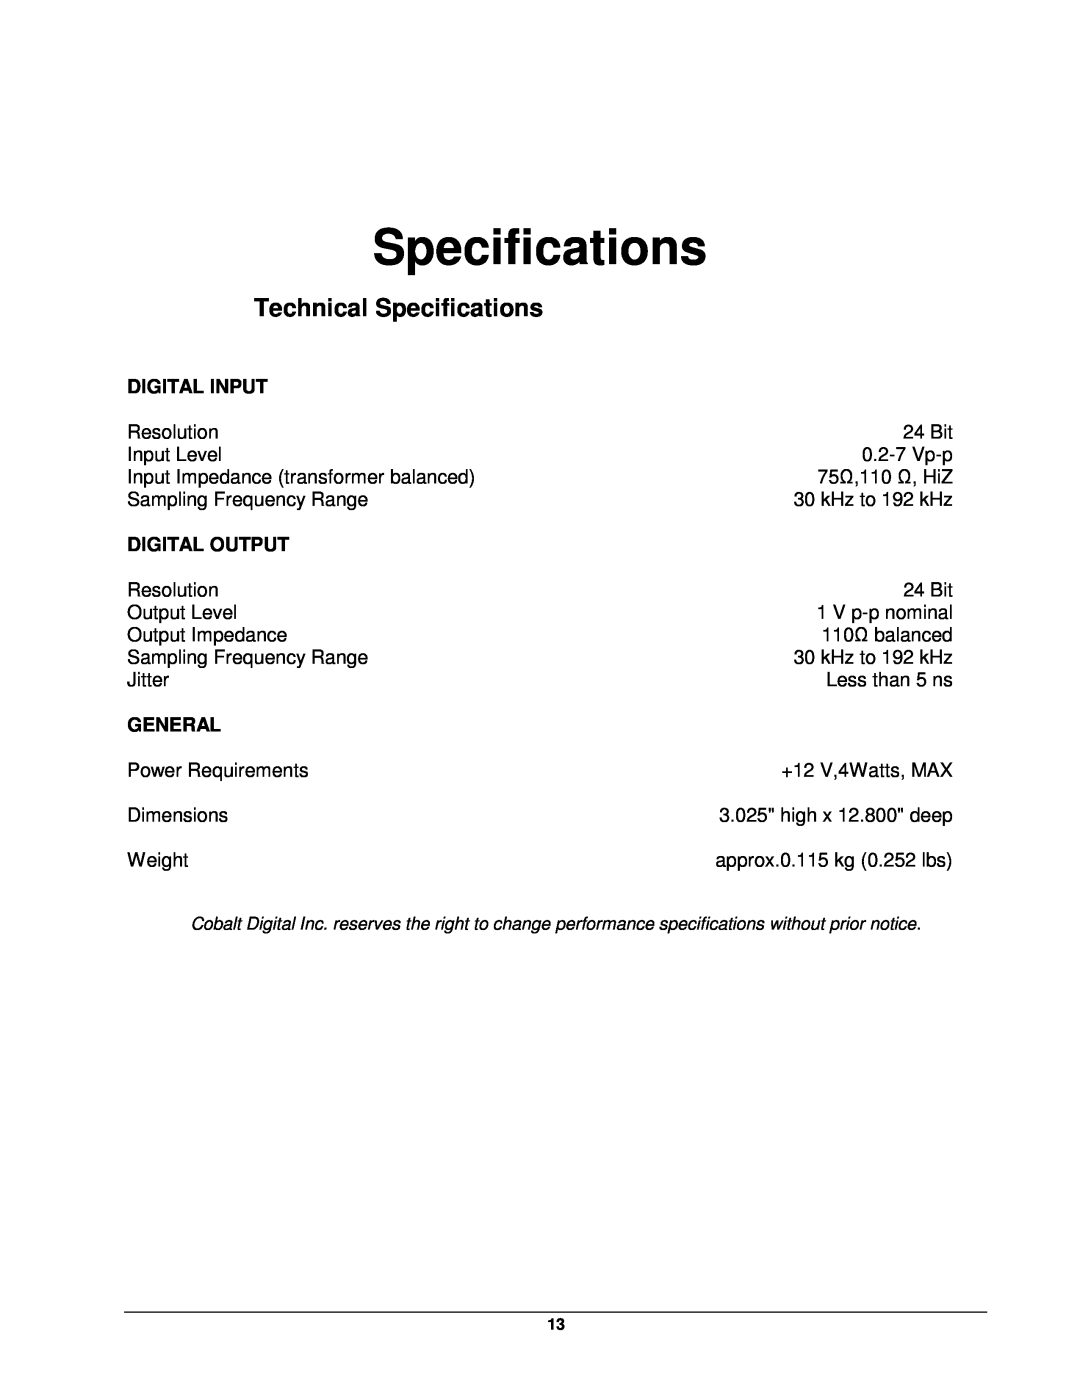 Cobalt Networks 9252 user manual Technical Specifications, Digital Input, Digital Output, General 